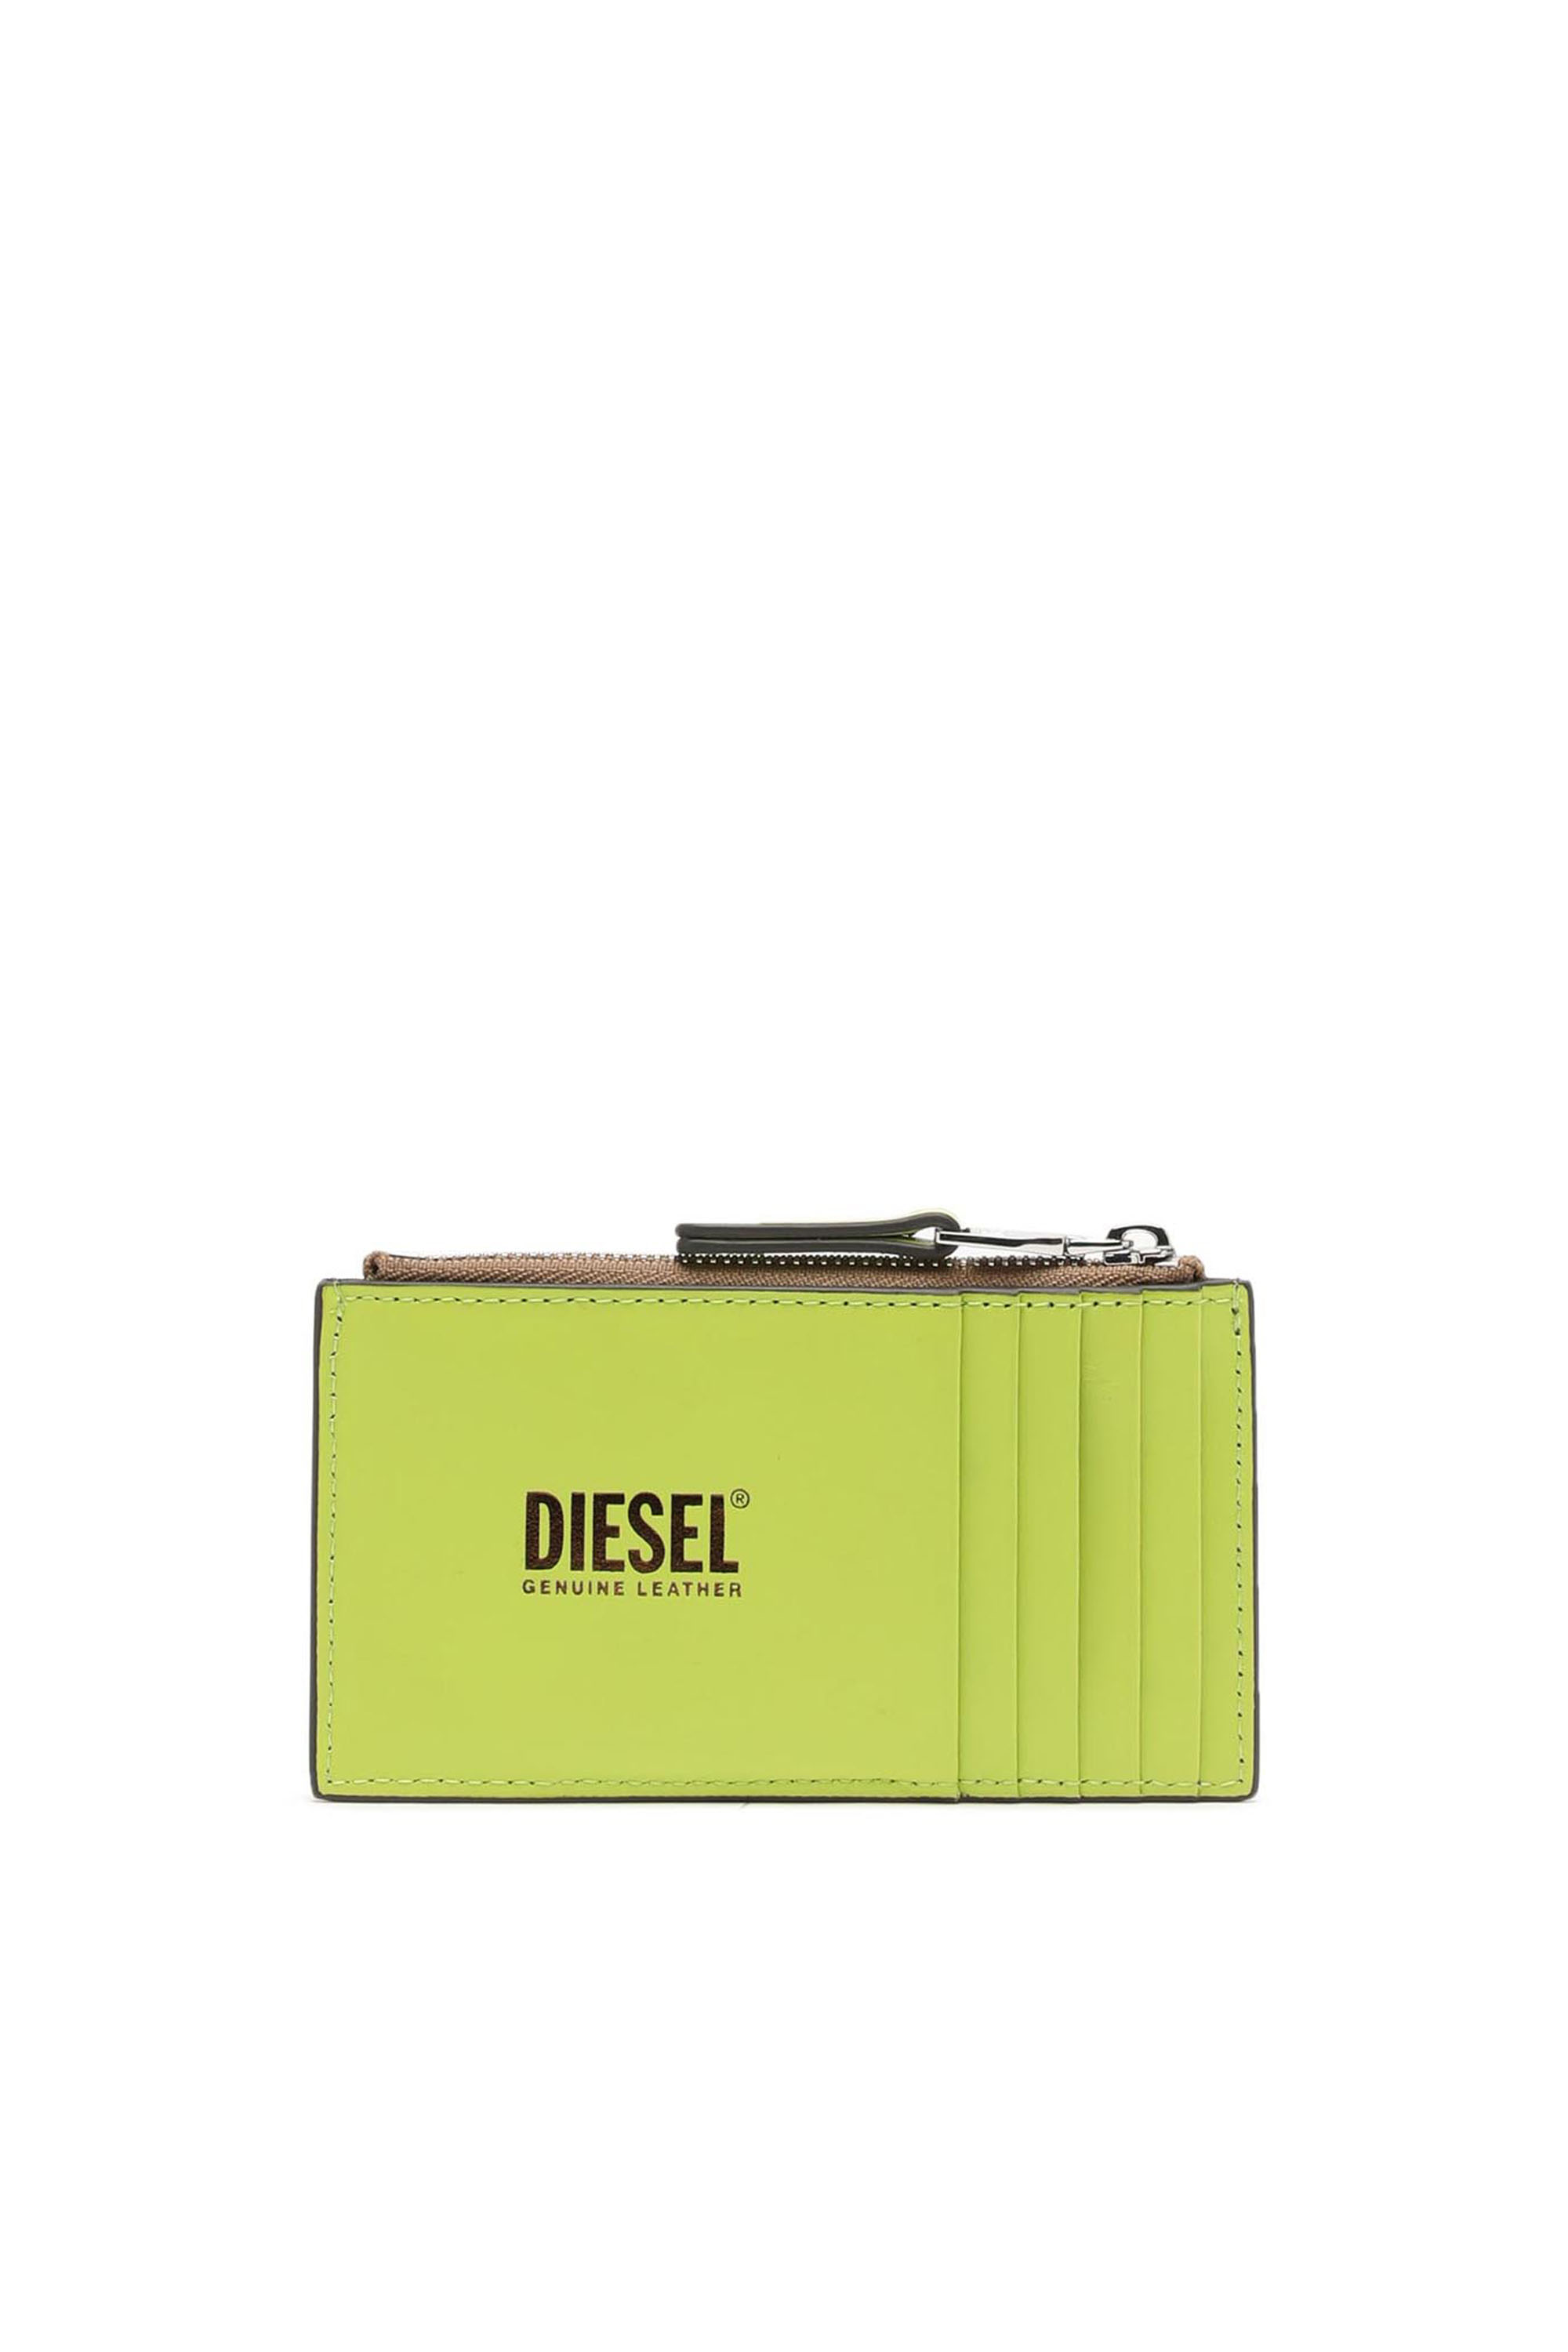 Diesel - CARD HOLDER COIN S, Gold - Image 2